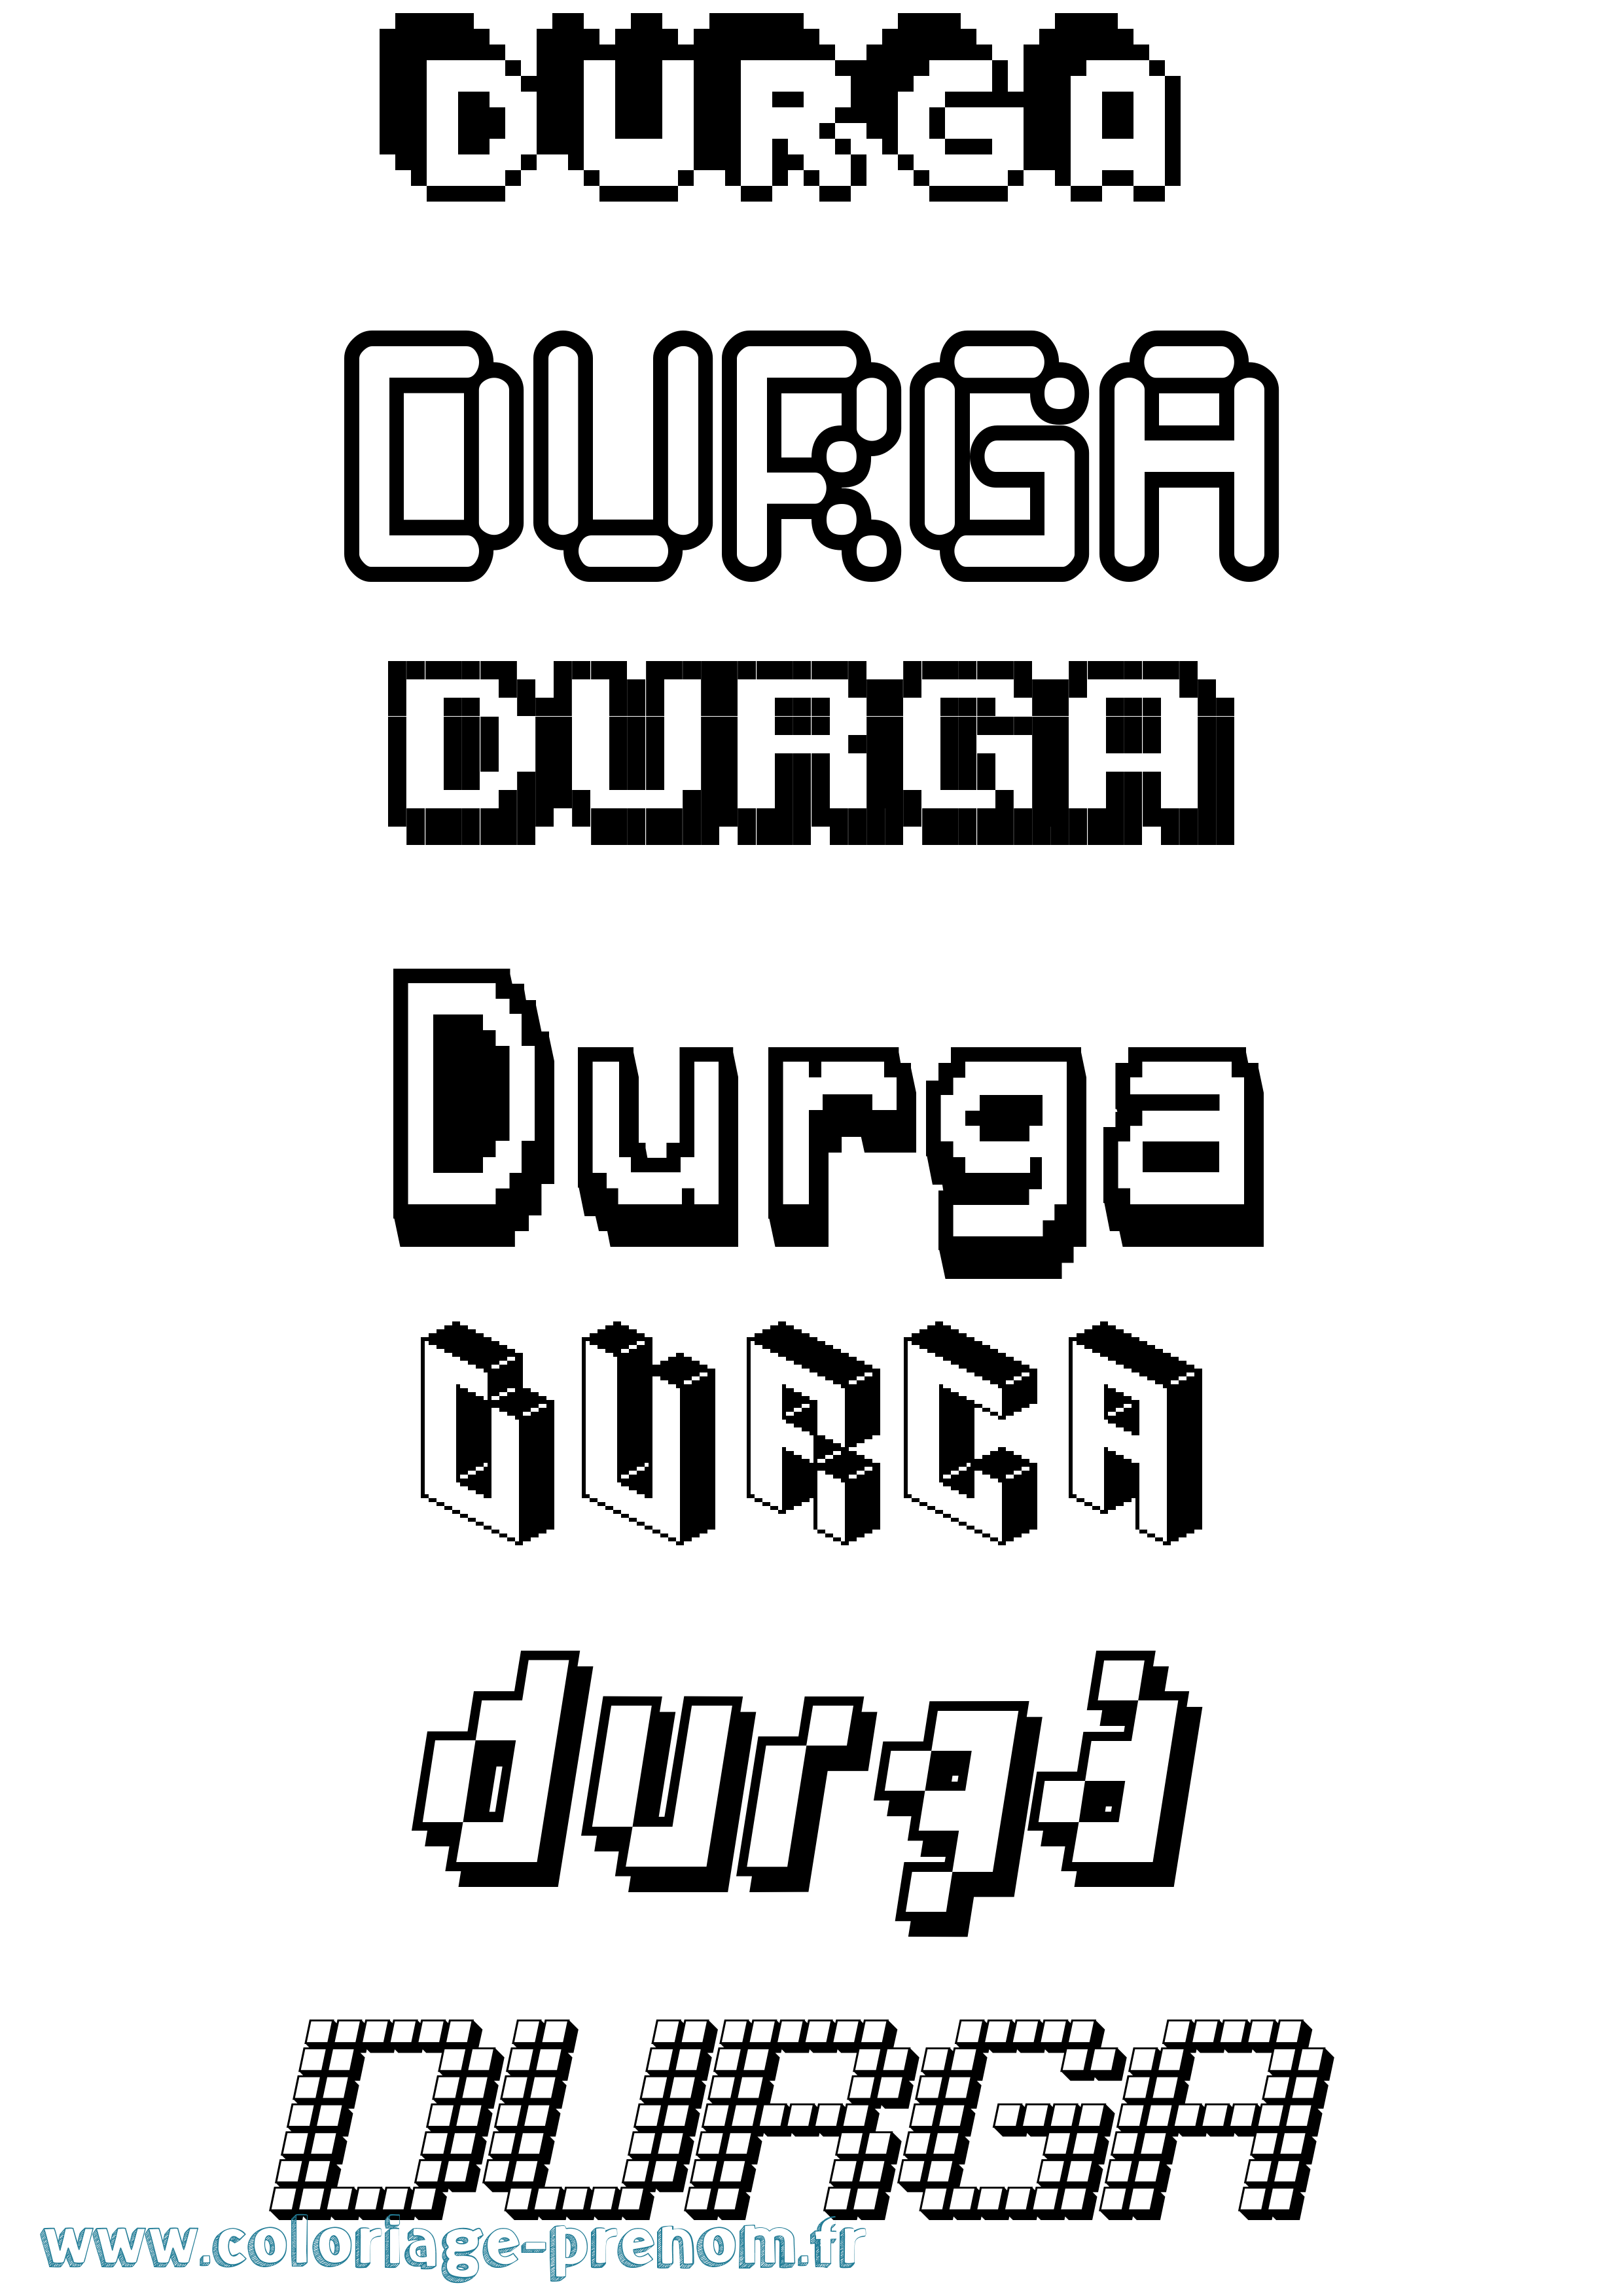 Coloriage prénom Durga Pixel